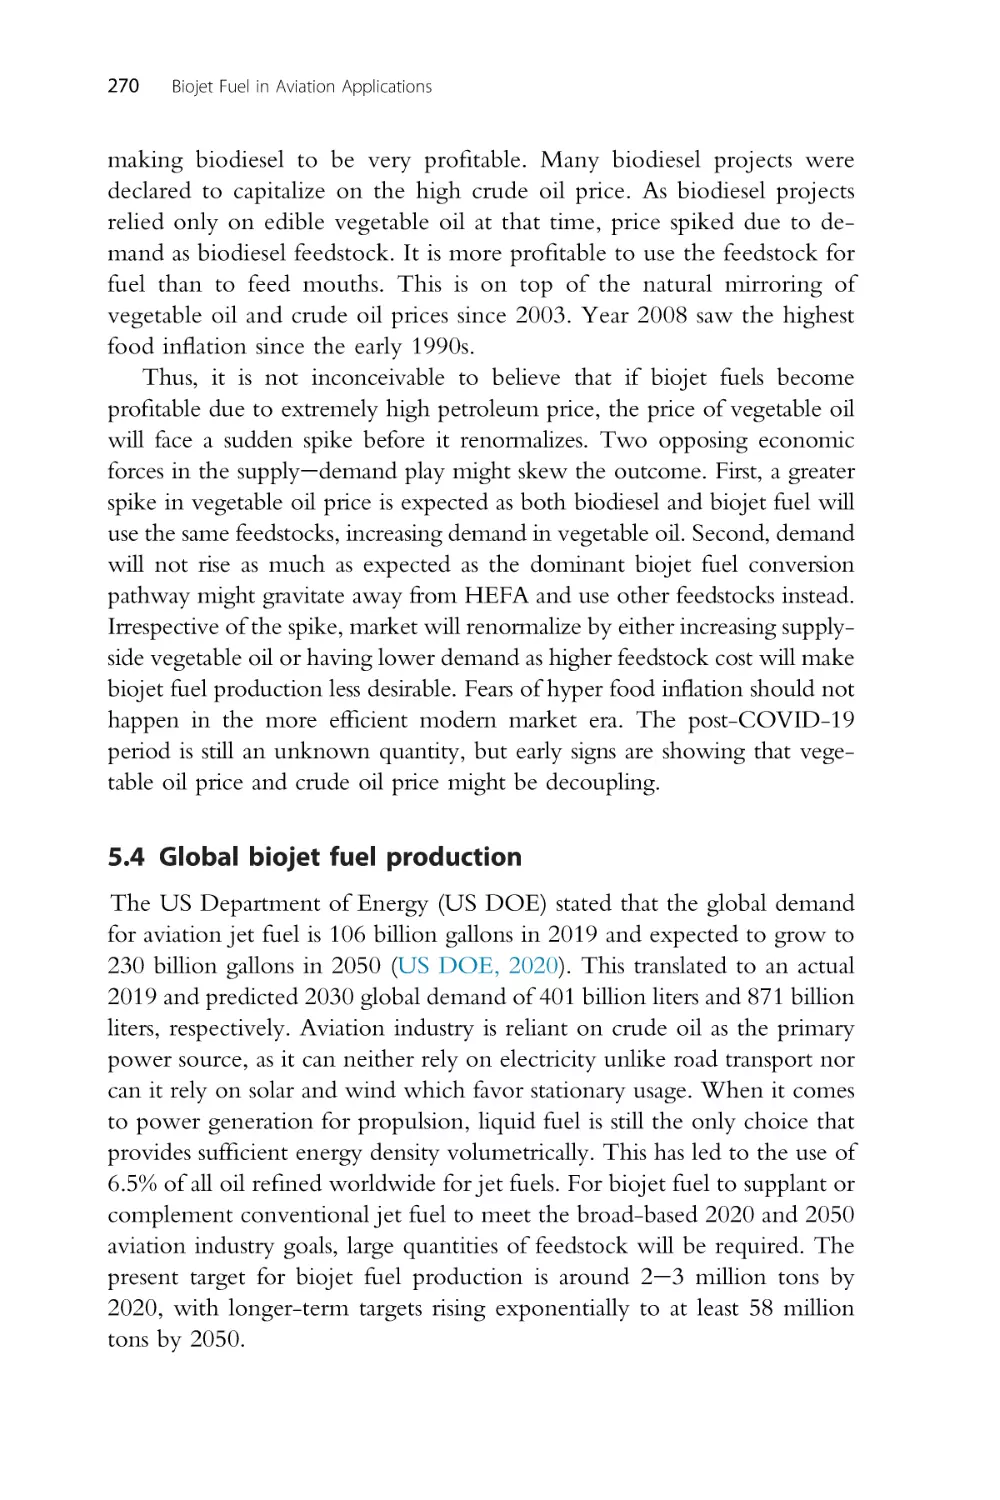 5.4 Global biojet fuel production